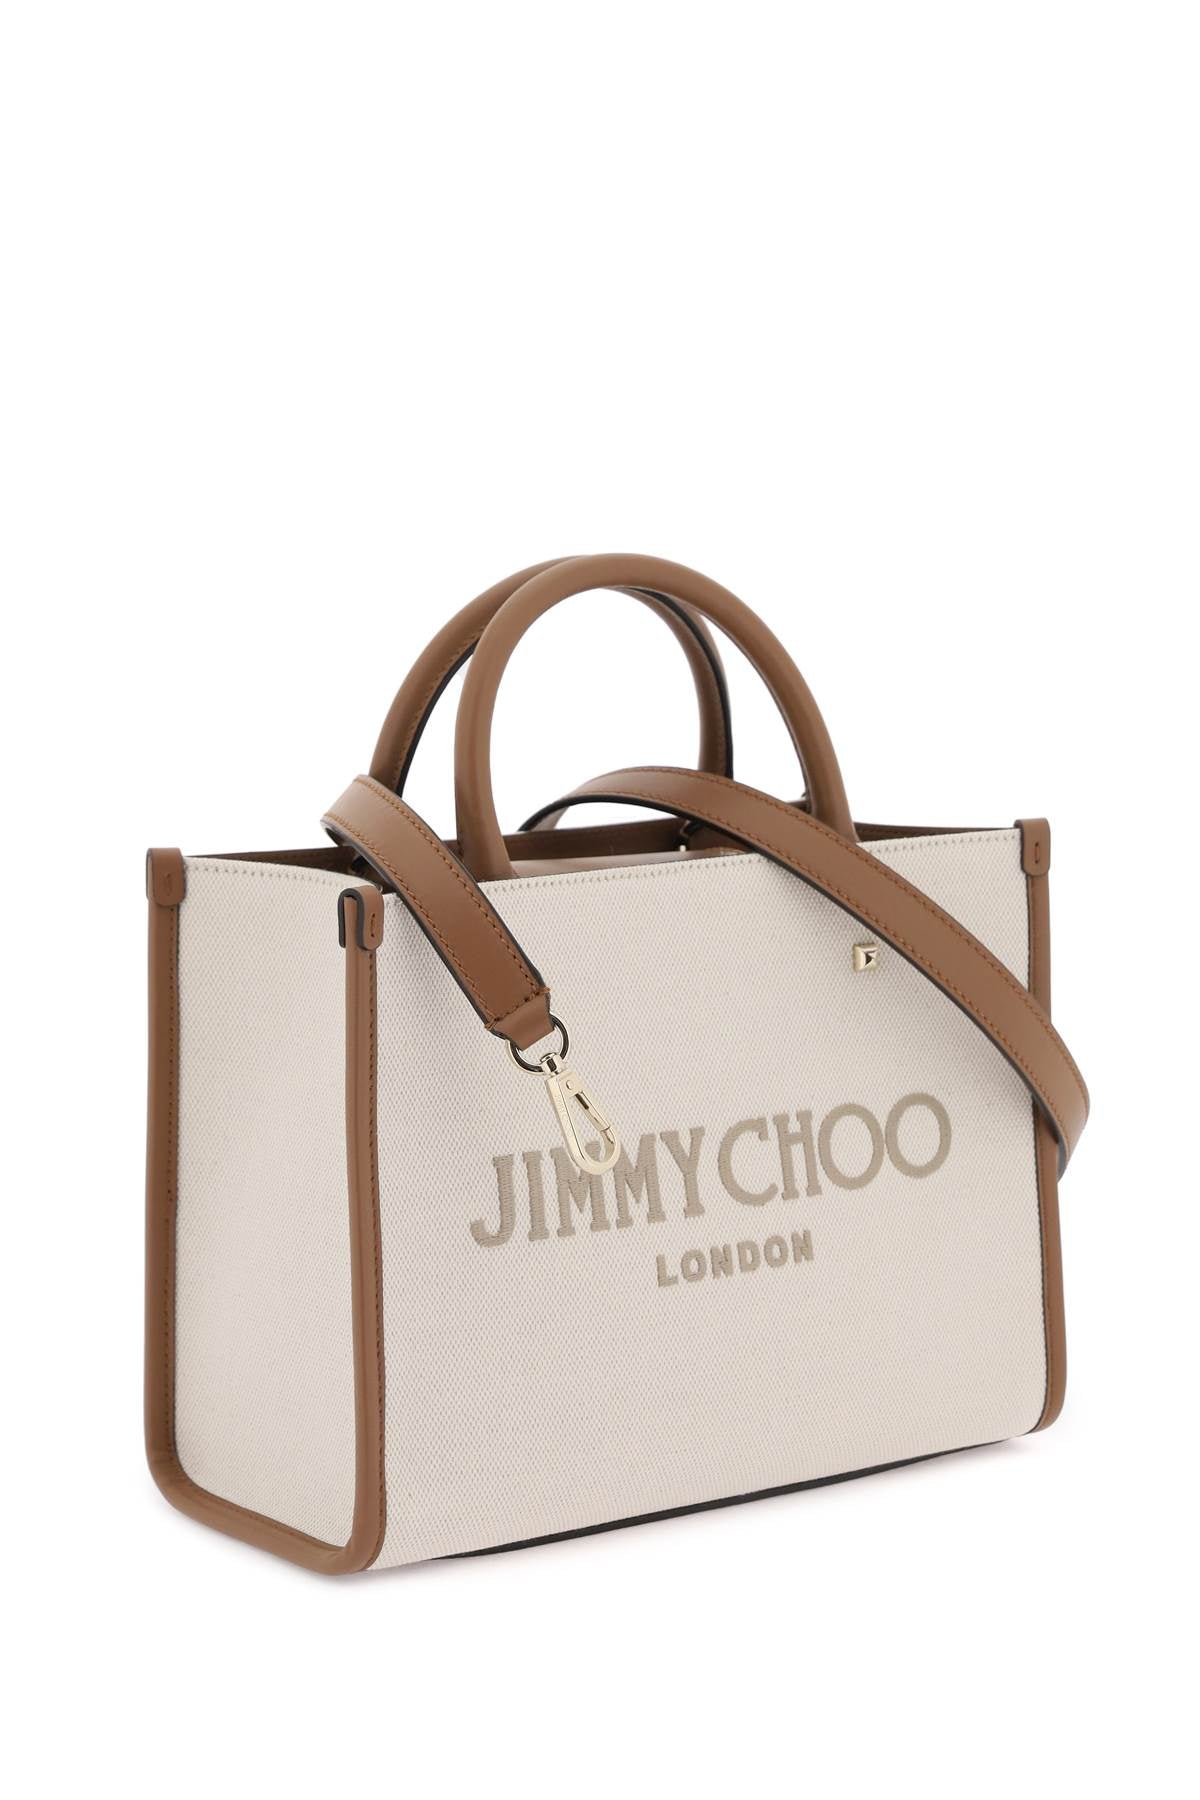 Jimmy choo small avenue tote bag – Urbanheer